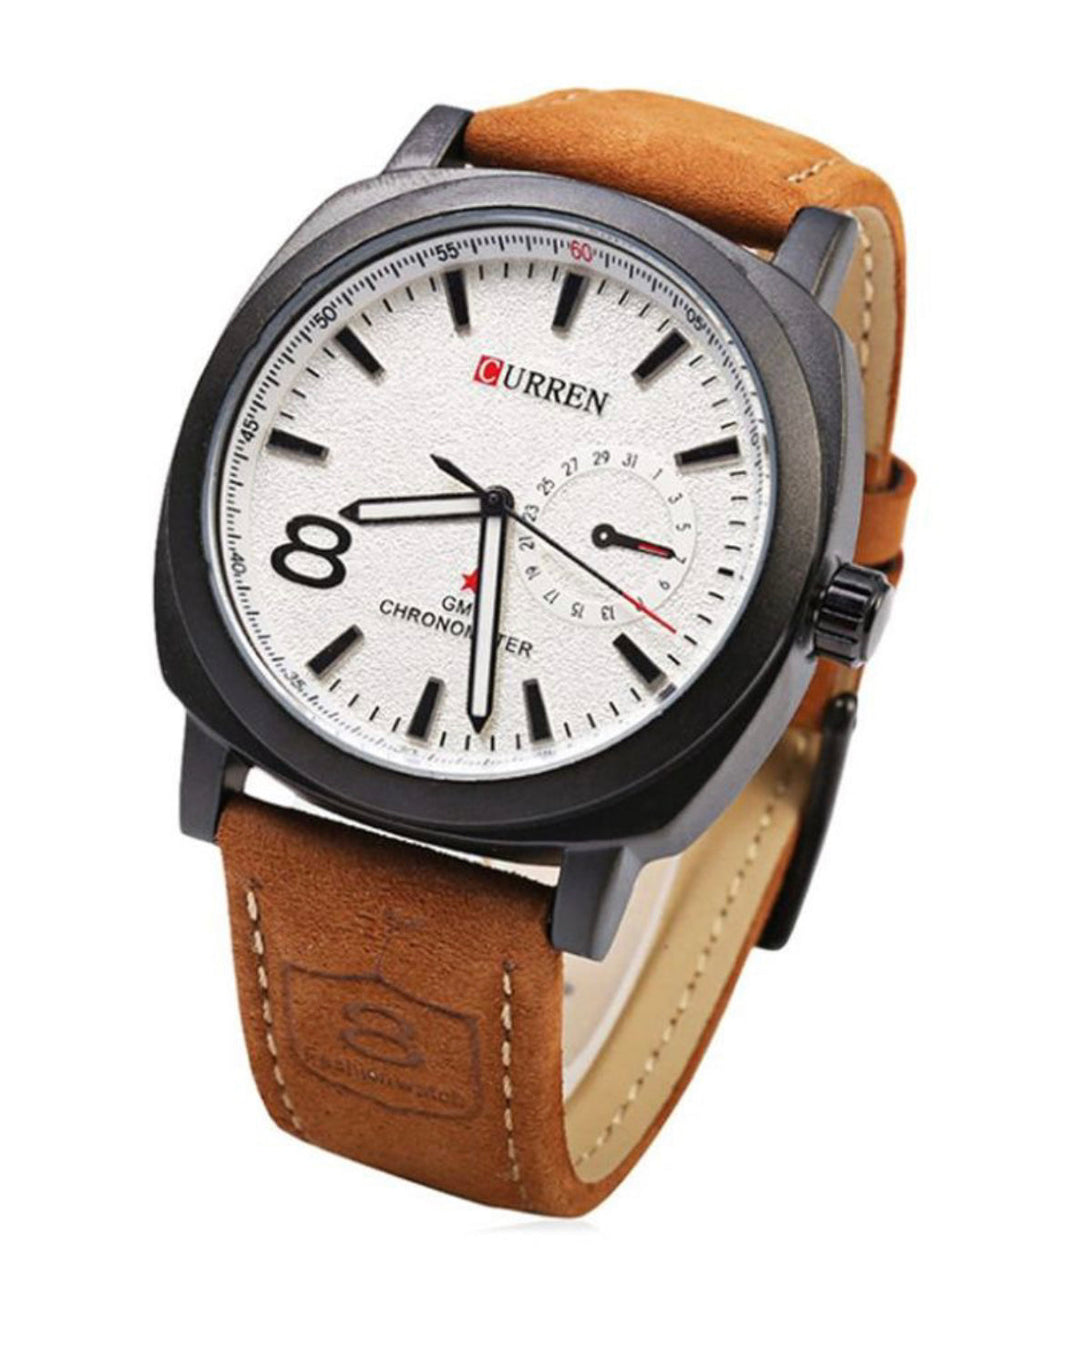 Water Resistant Analog Wrist Watch 8139 – 41 mm